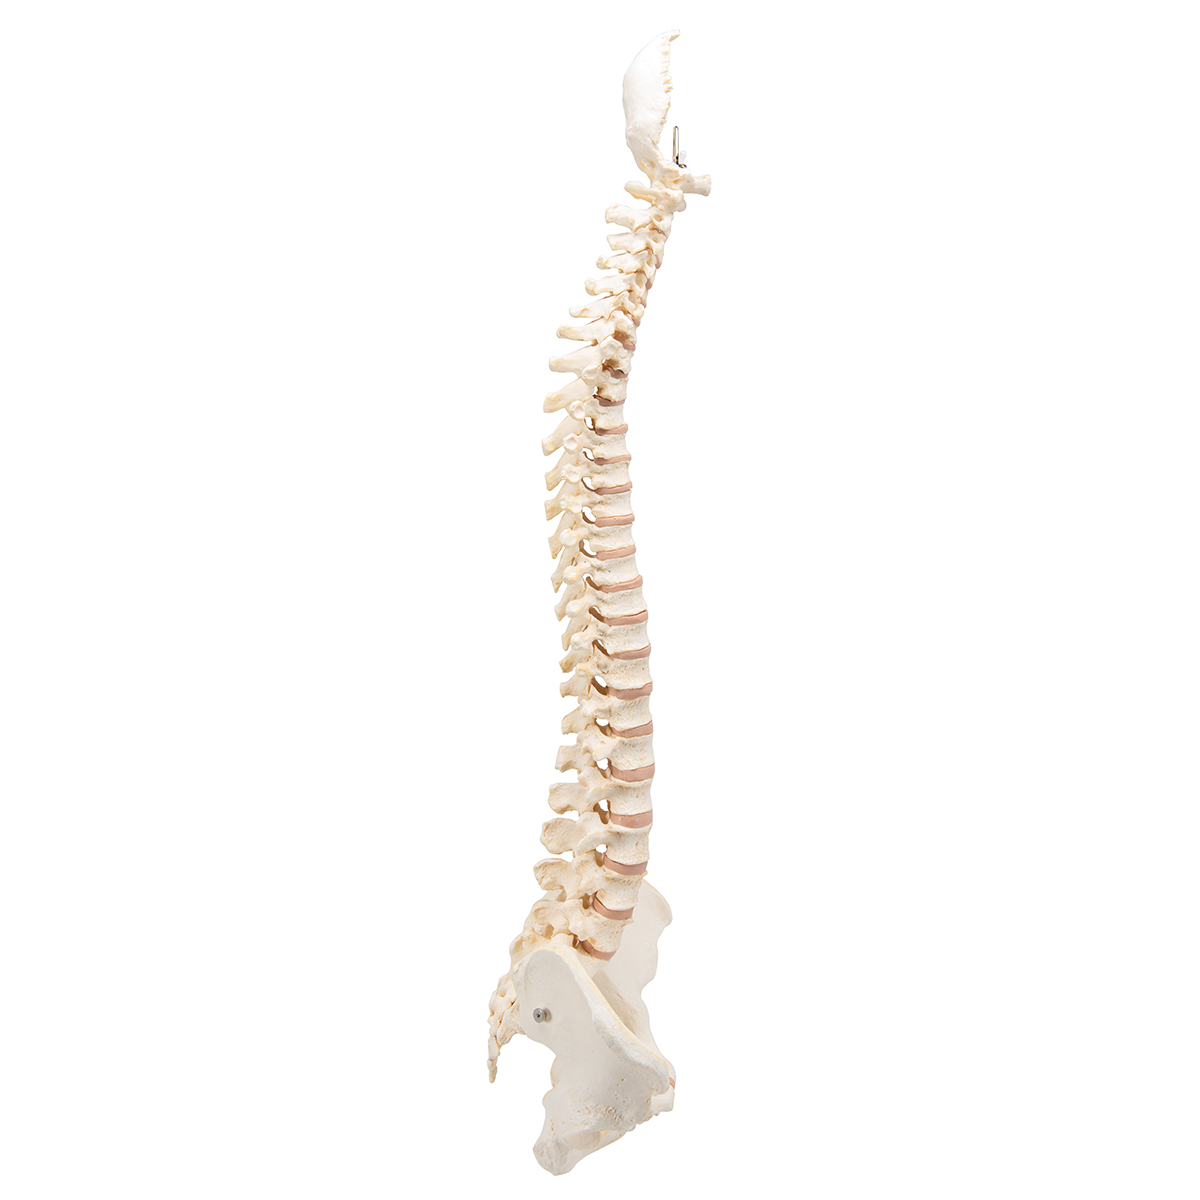 Anatomical Teaching Models - Plastic Spinal Column - Vertebral Column